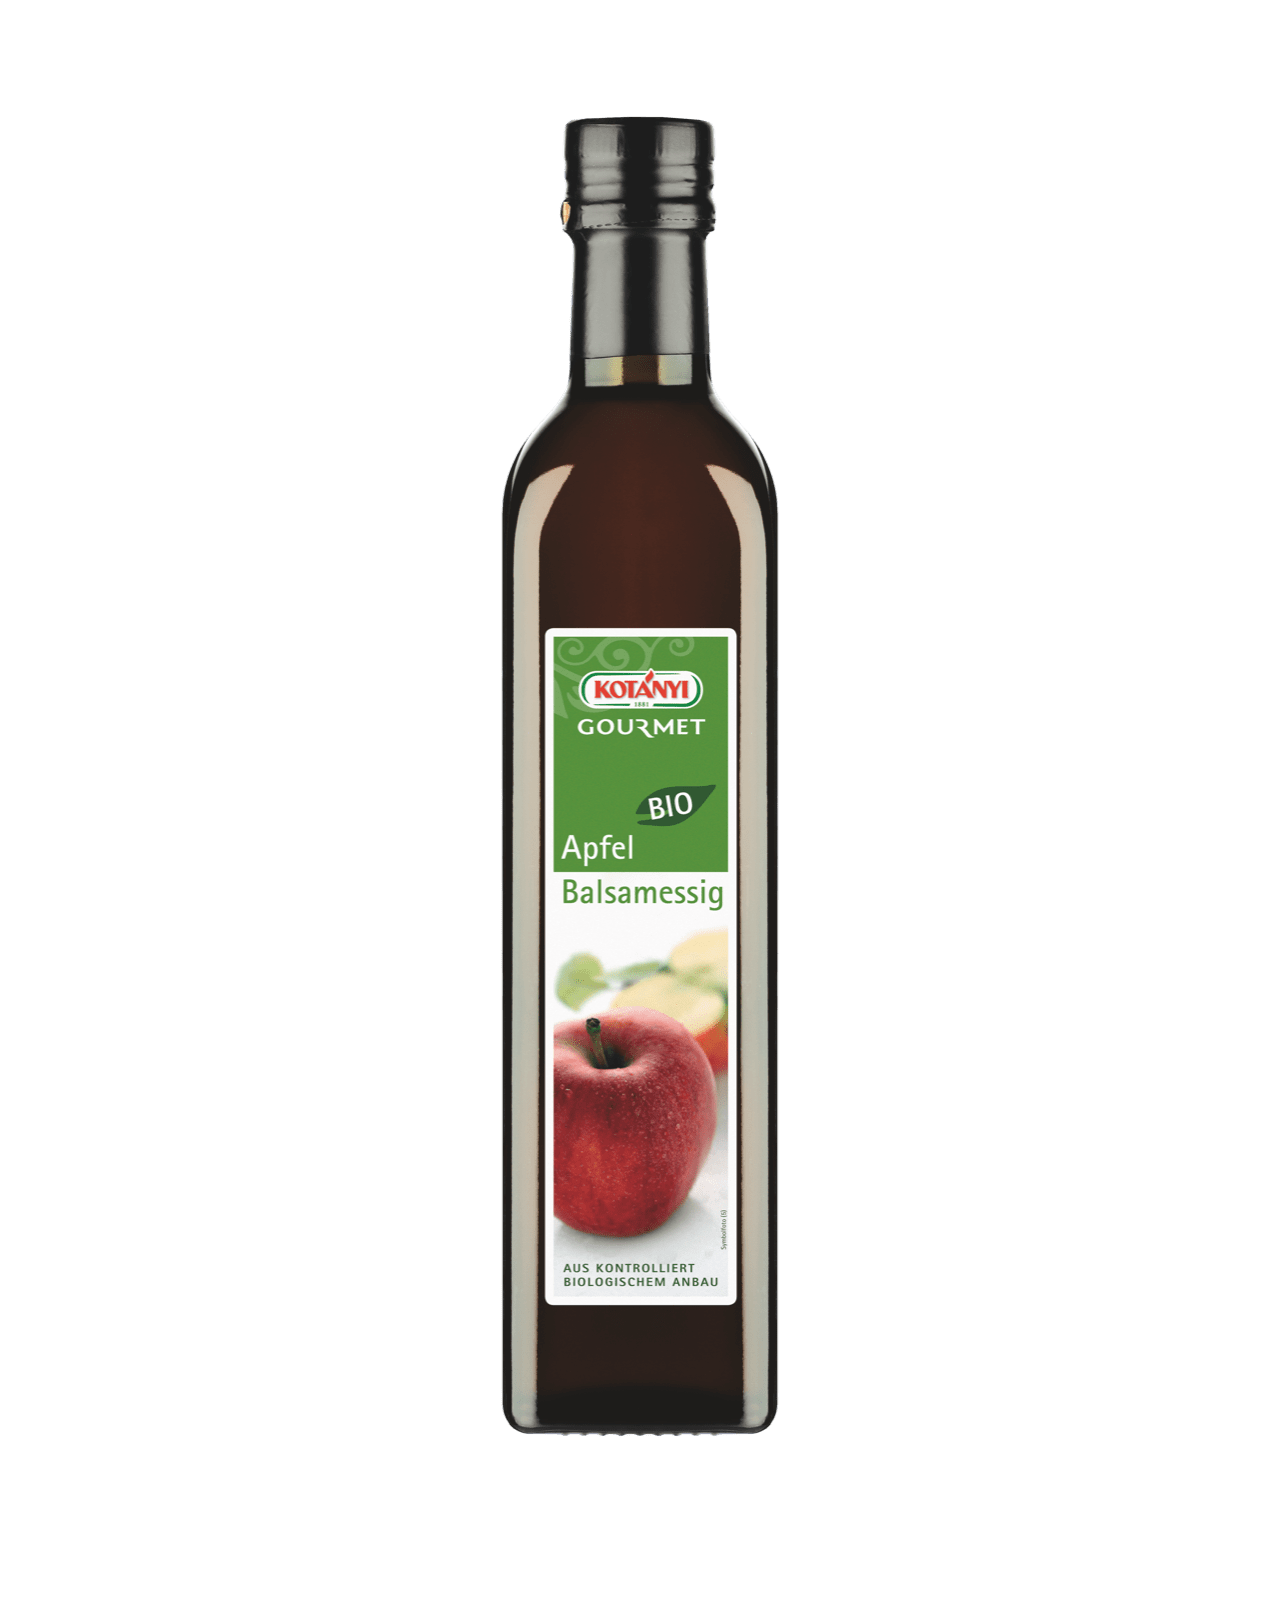 Kotányi Gourmet Bio Apfel Balsamessigin der 500ml Flasche